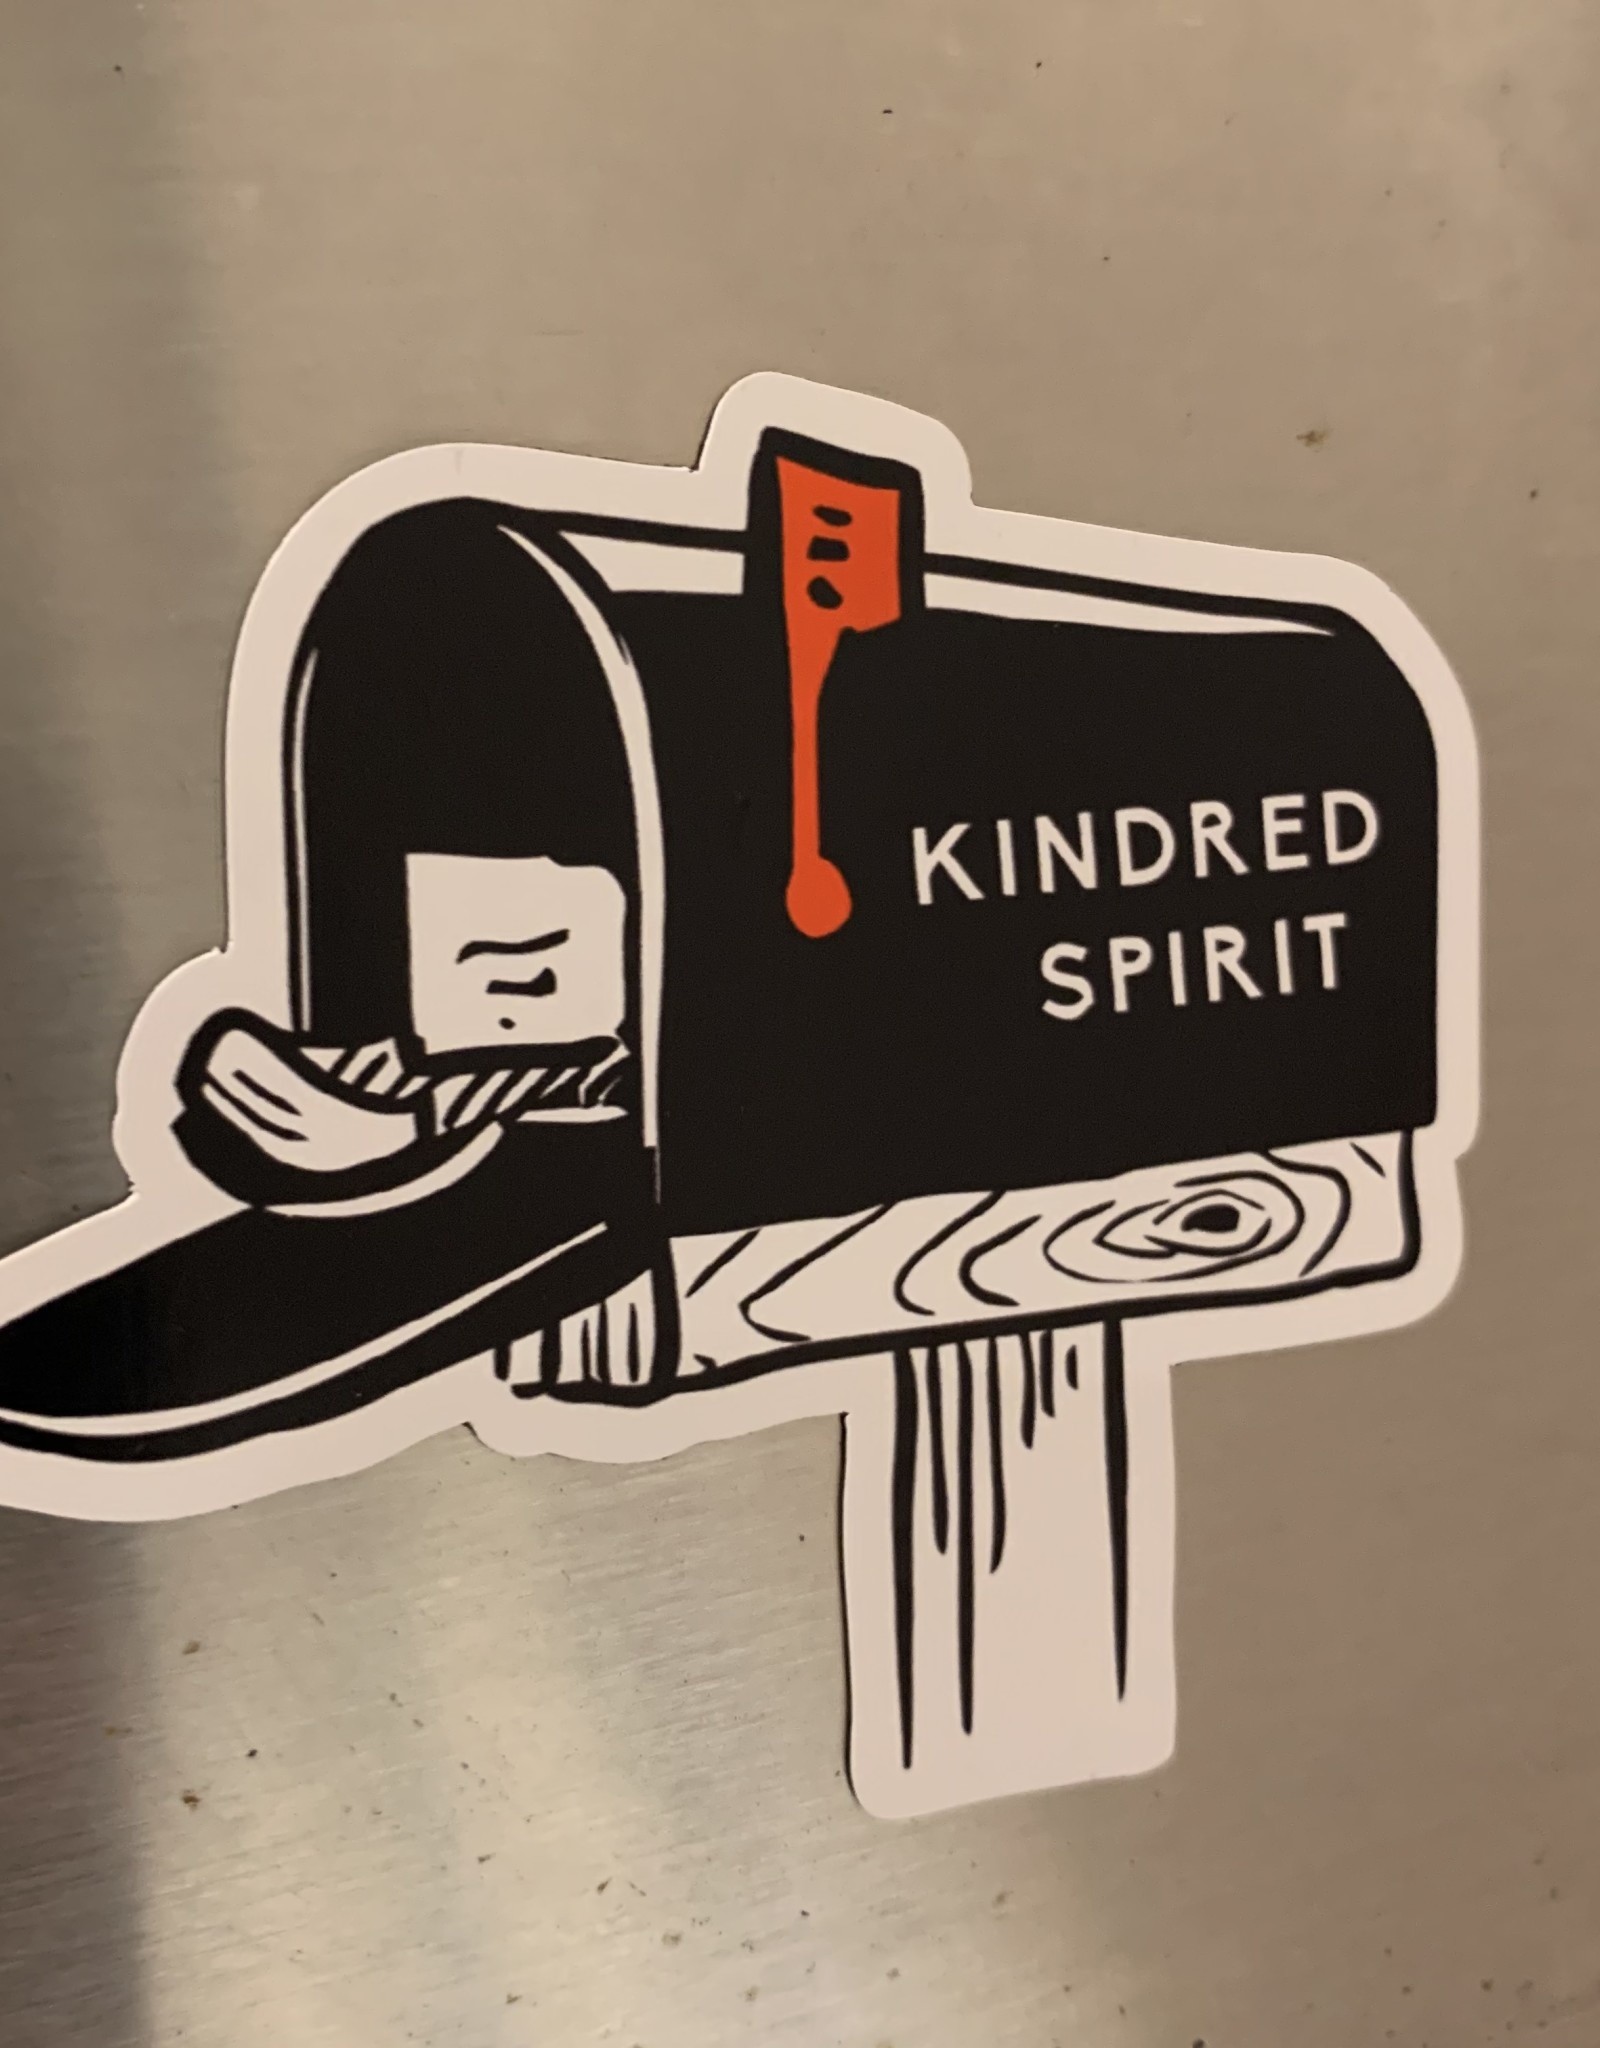 THE KINDRED SPIRIT KINDRED SPIRIT CAR MAGNET